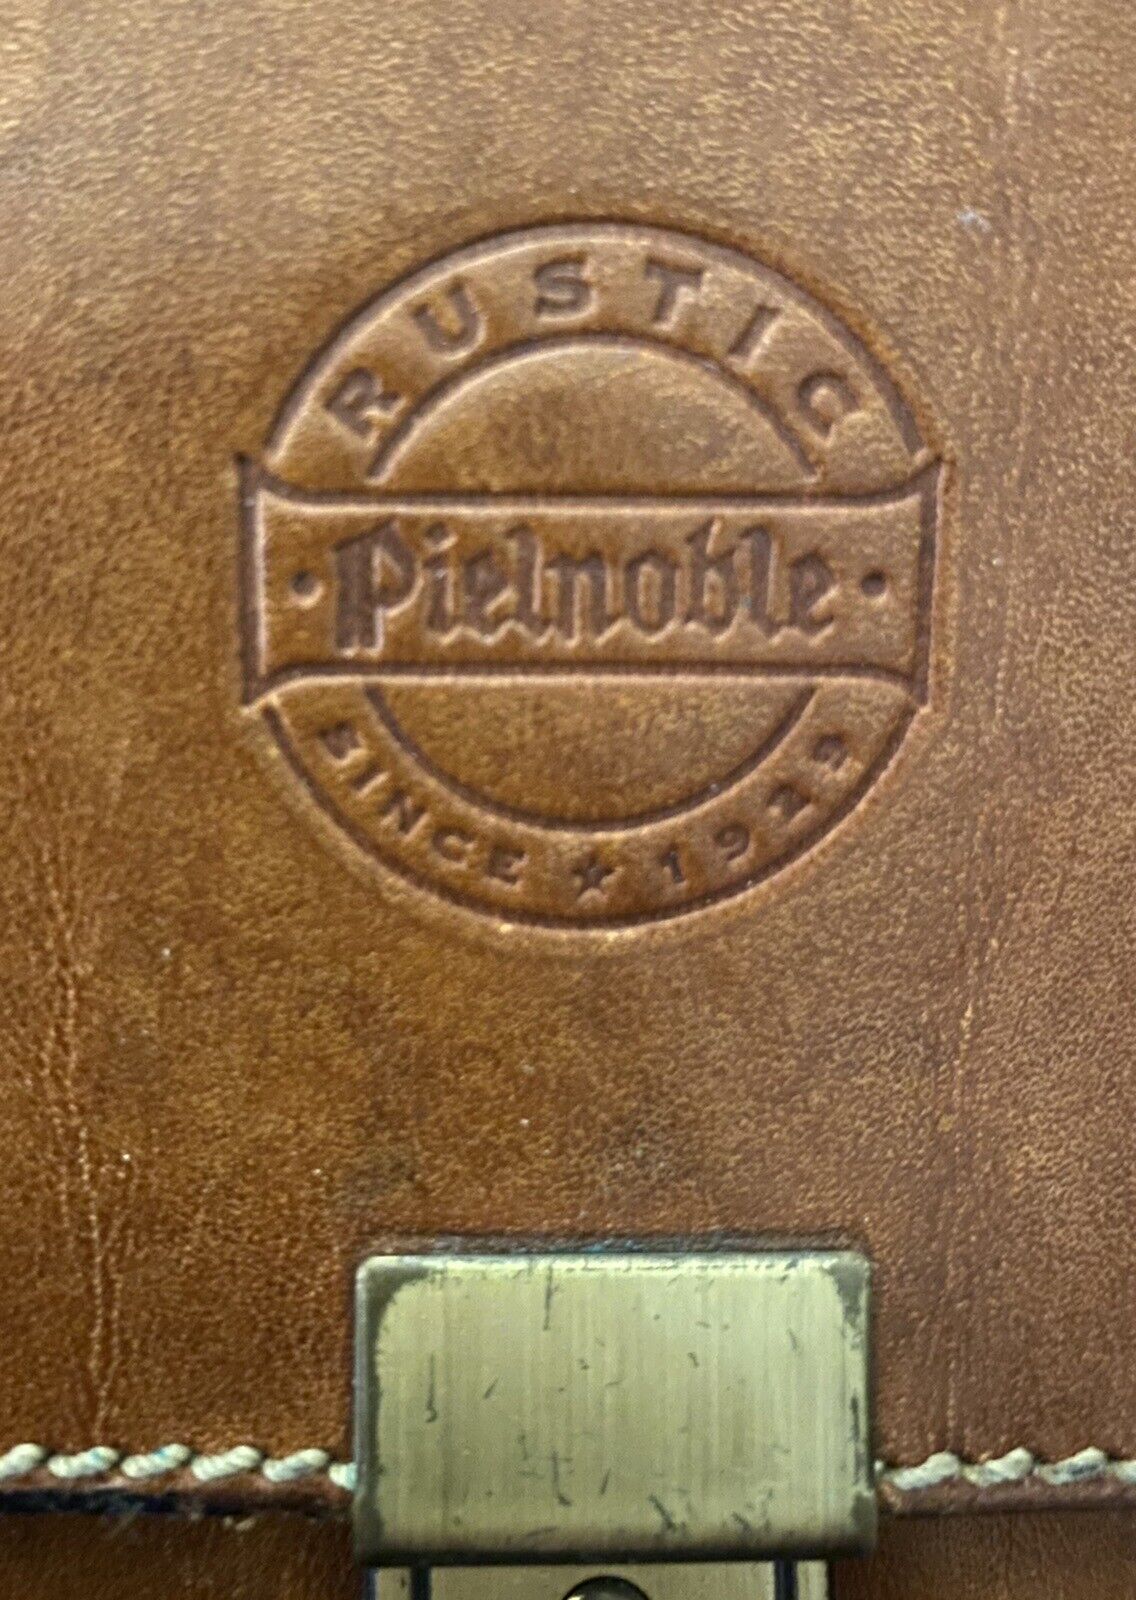 Vintage Rustic Pielnoble Leather Clutch - image 6